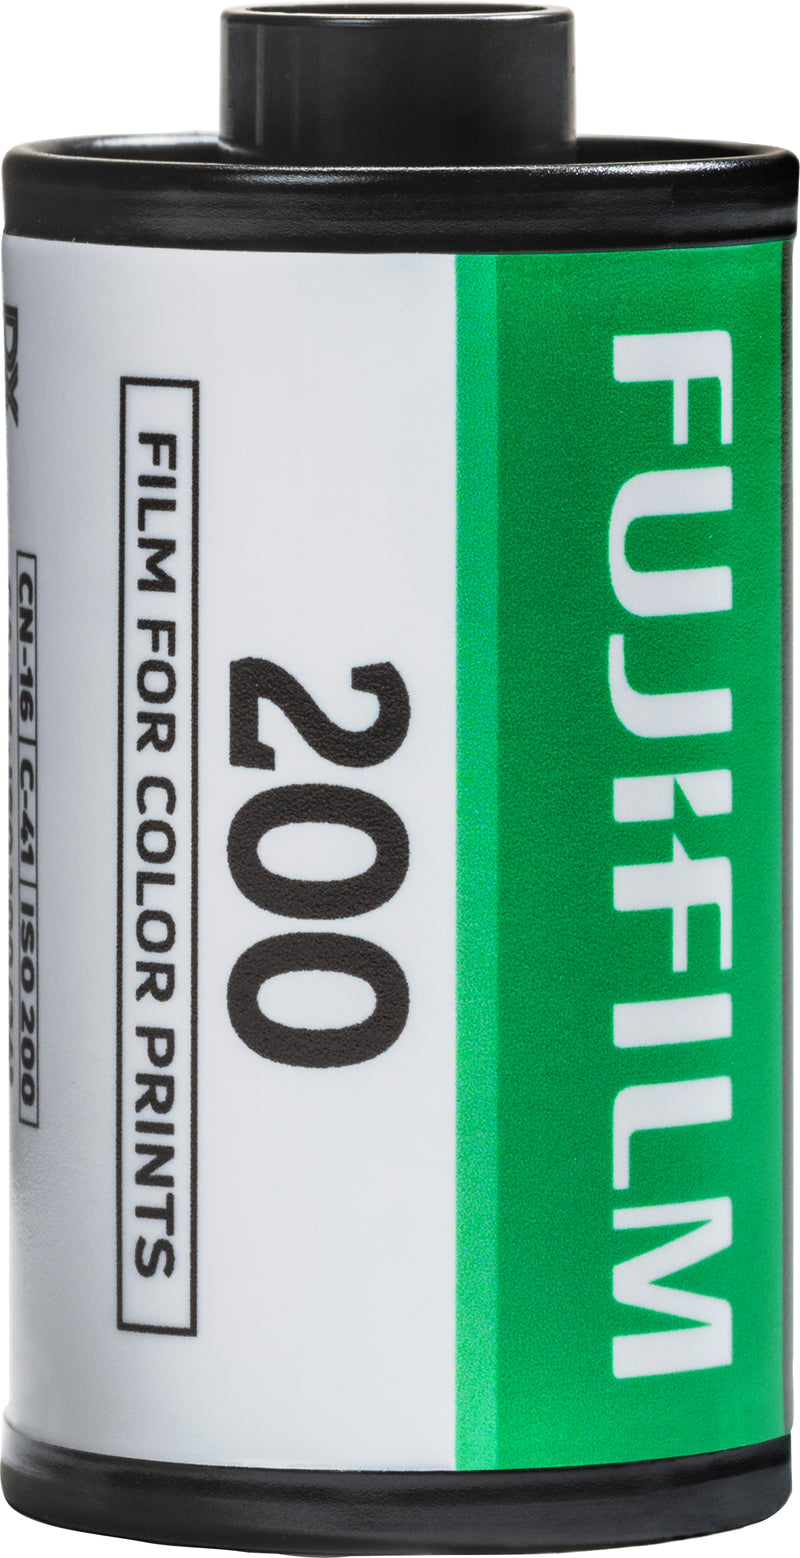 Films Fujifilm ISO 200 36 poses